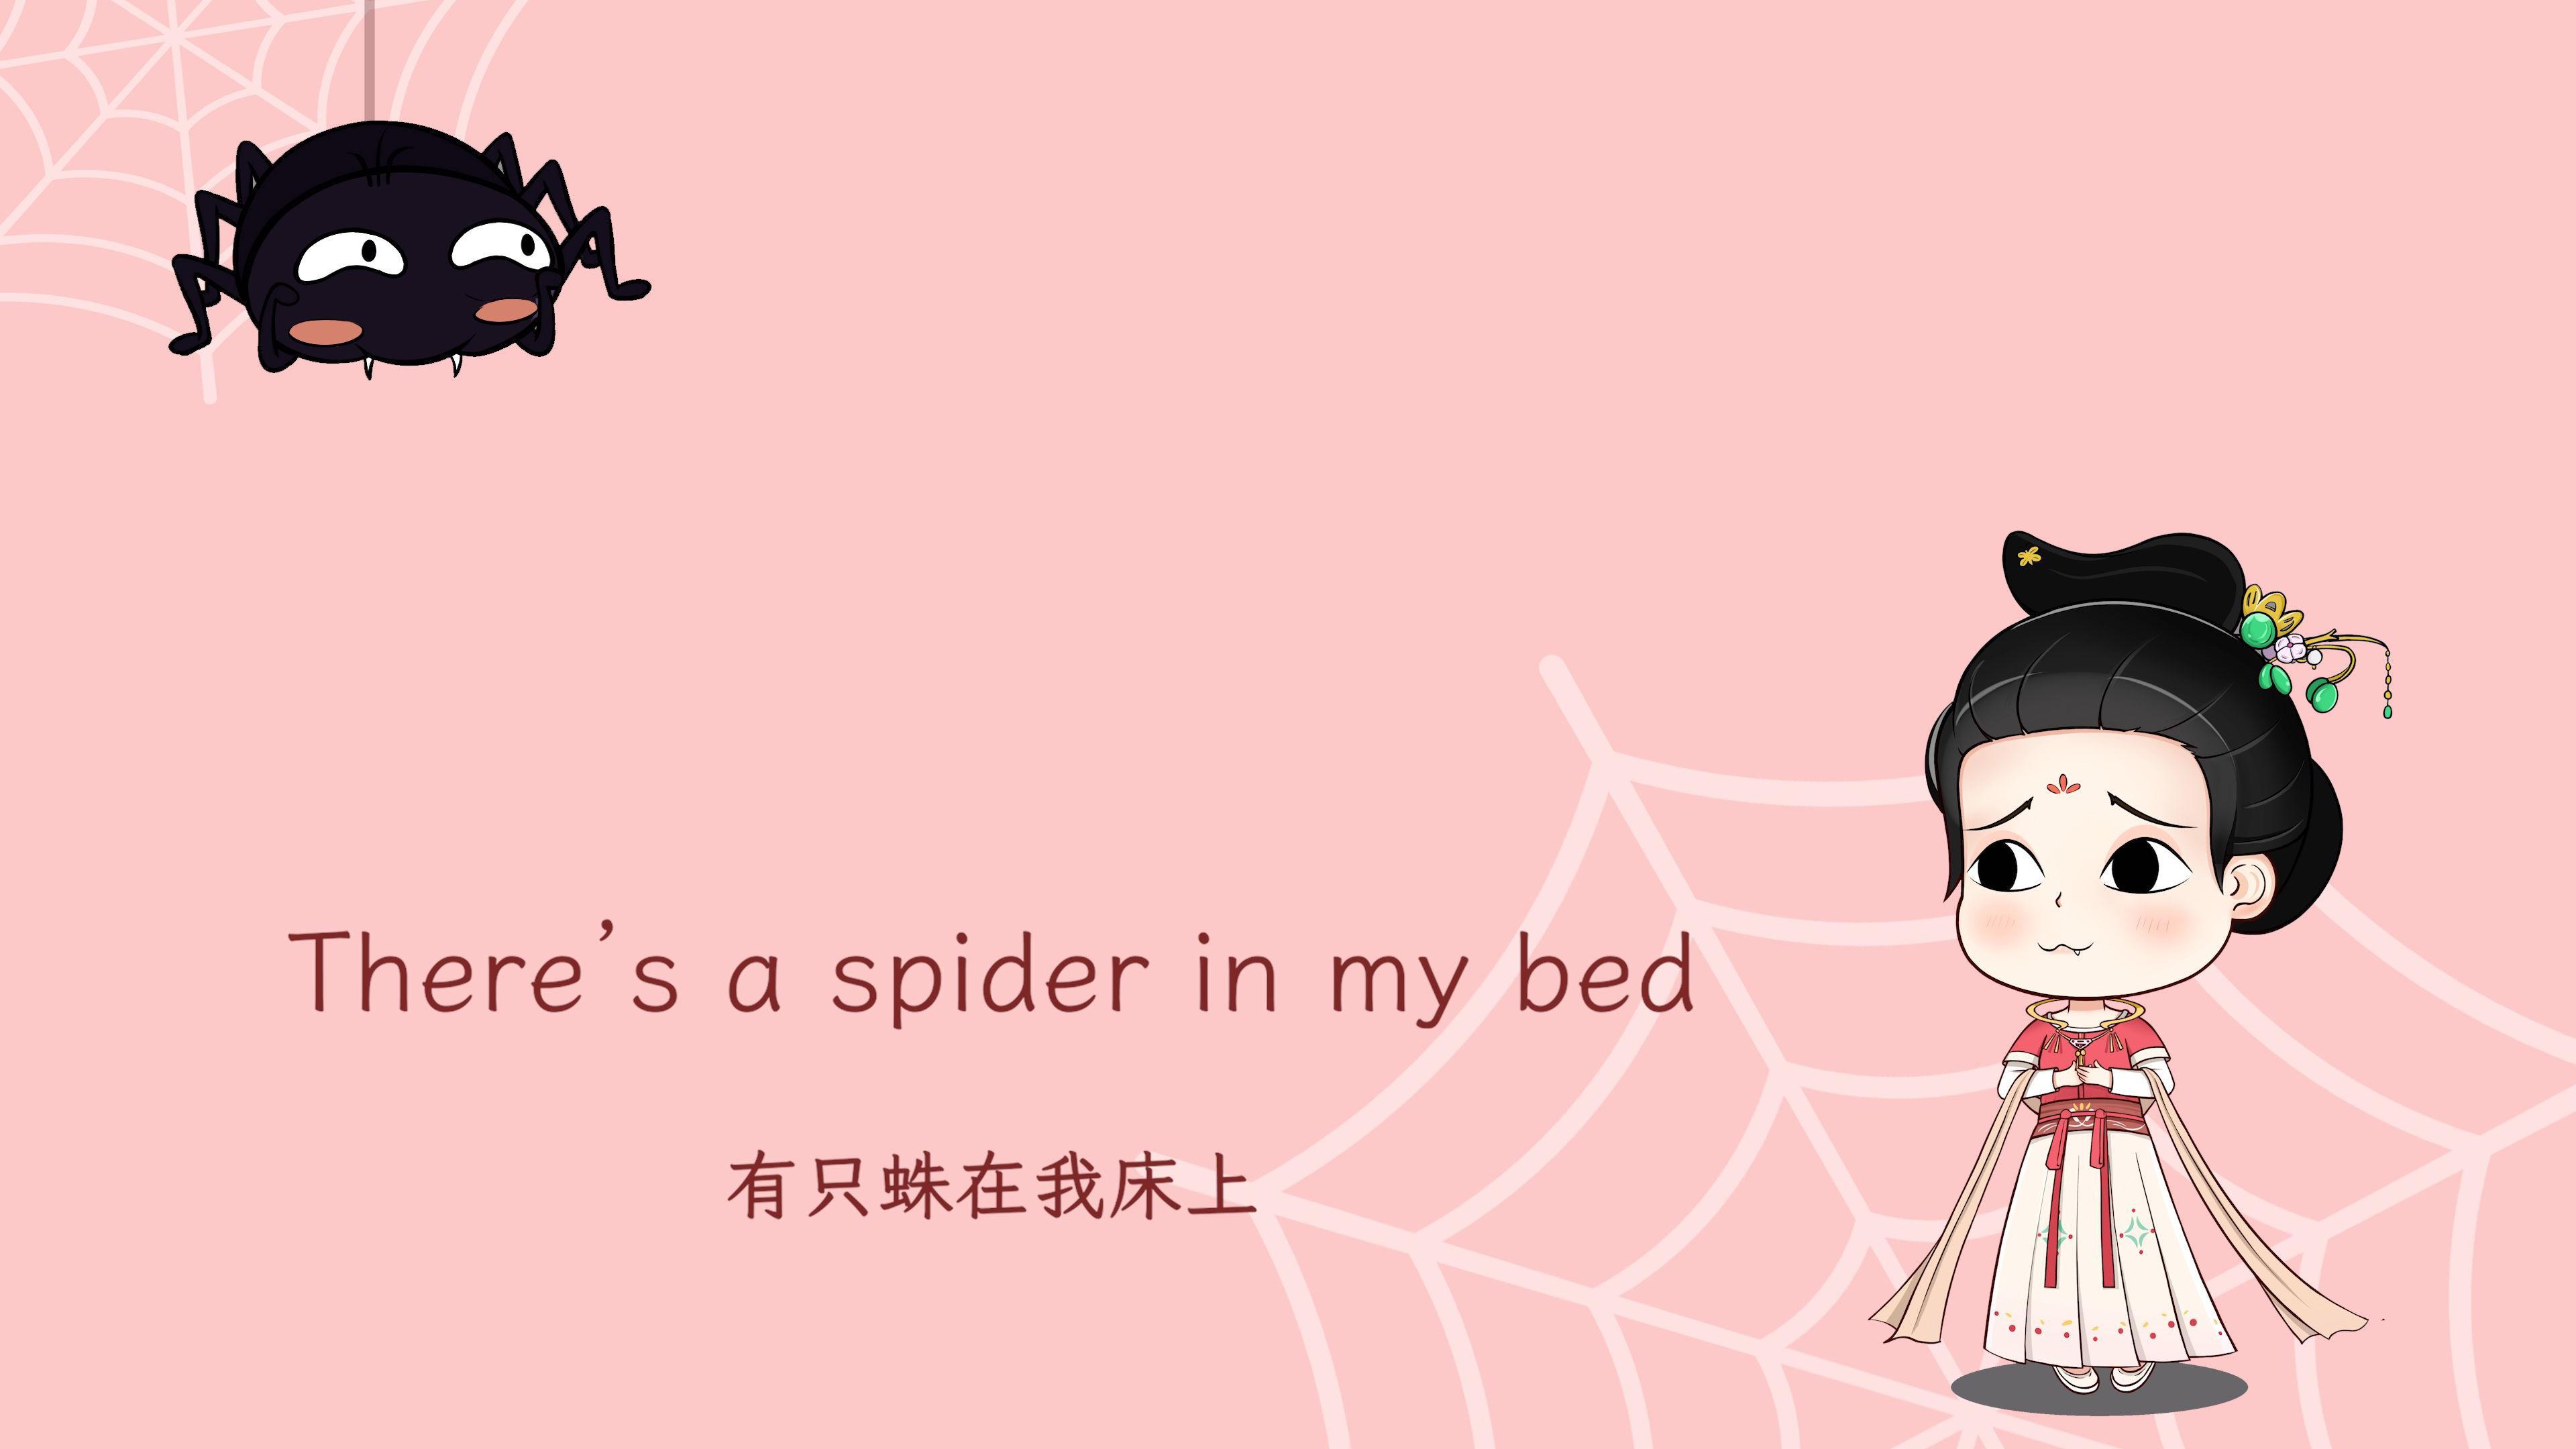 谯酌Dynasty - Spider In My Bed 蜘蛛恐惧症必备鬼畜治愈翻唱